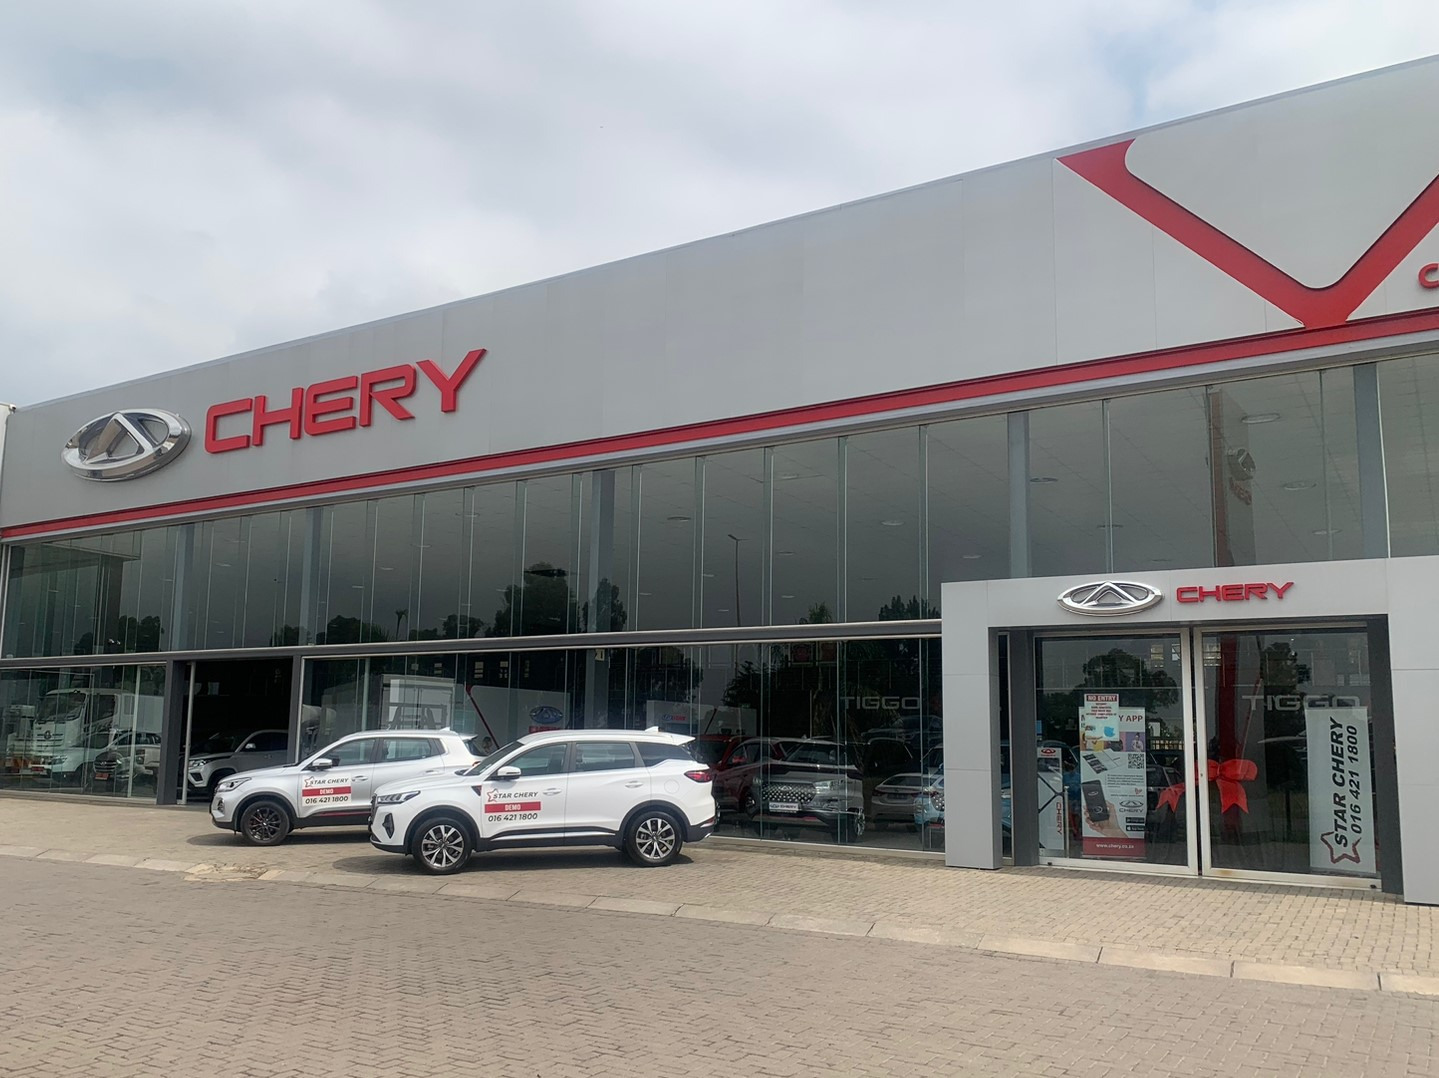 The new Chery dealership in Vanderbijlpark, part of the Star Motor Group.